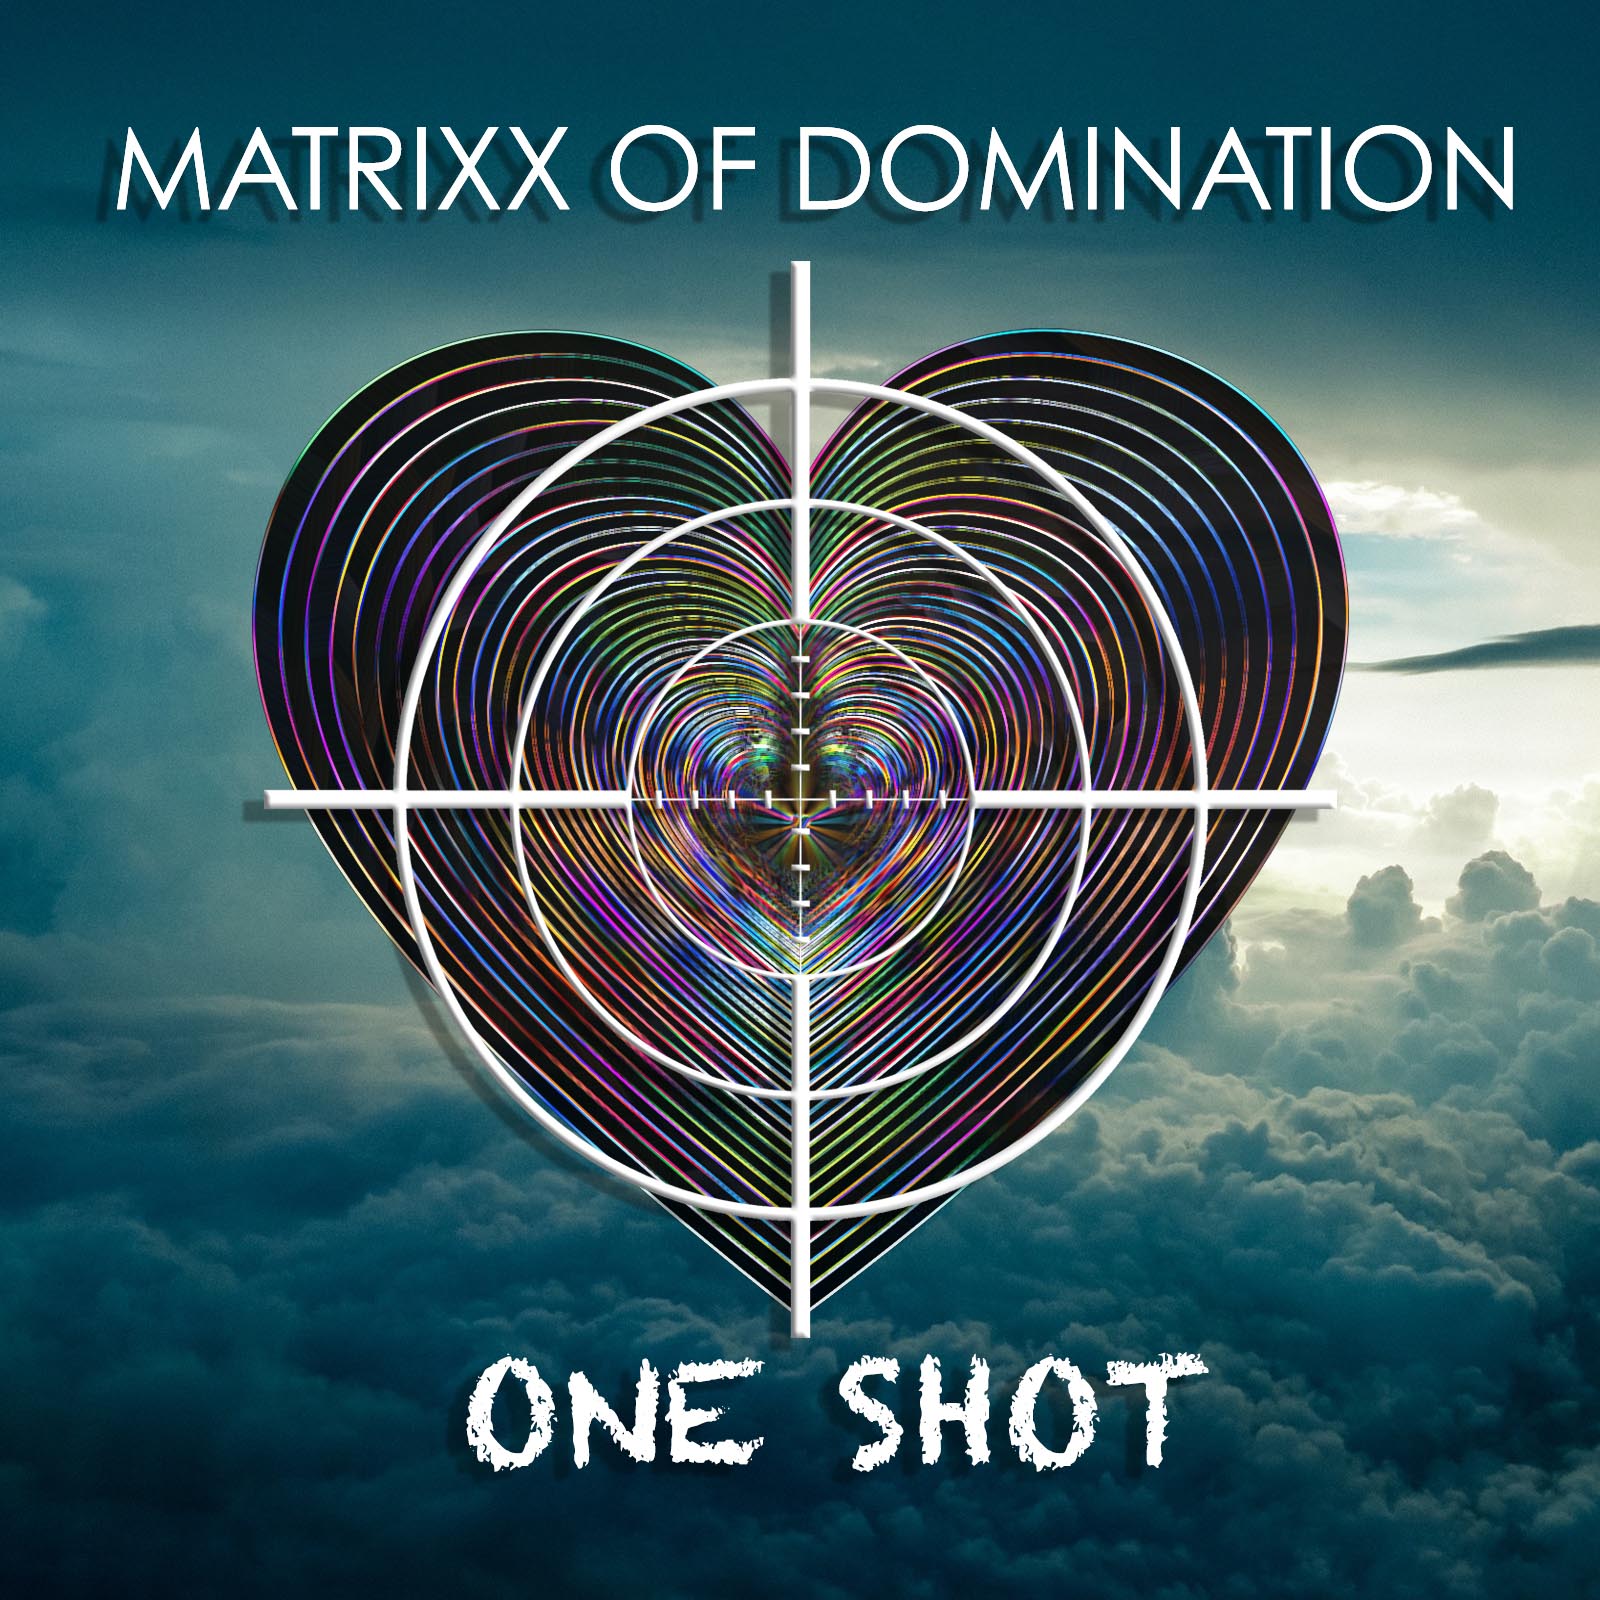 Matrixx of Domination One Shot (Rocked) Single Cover